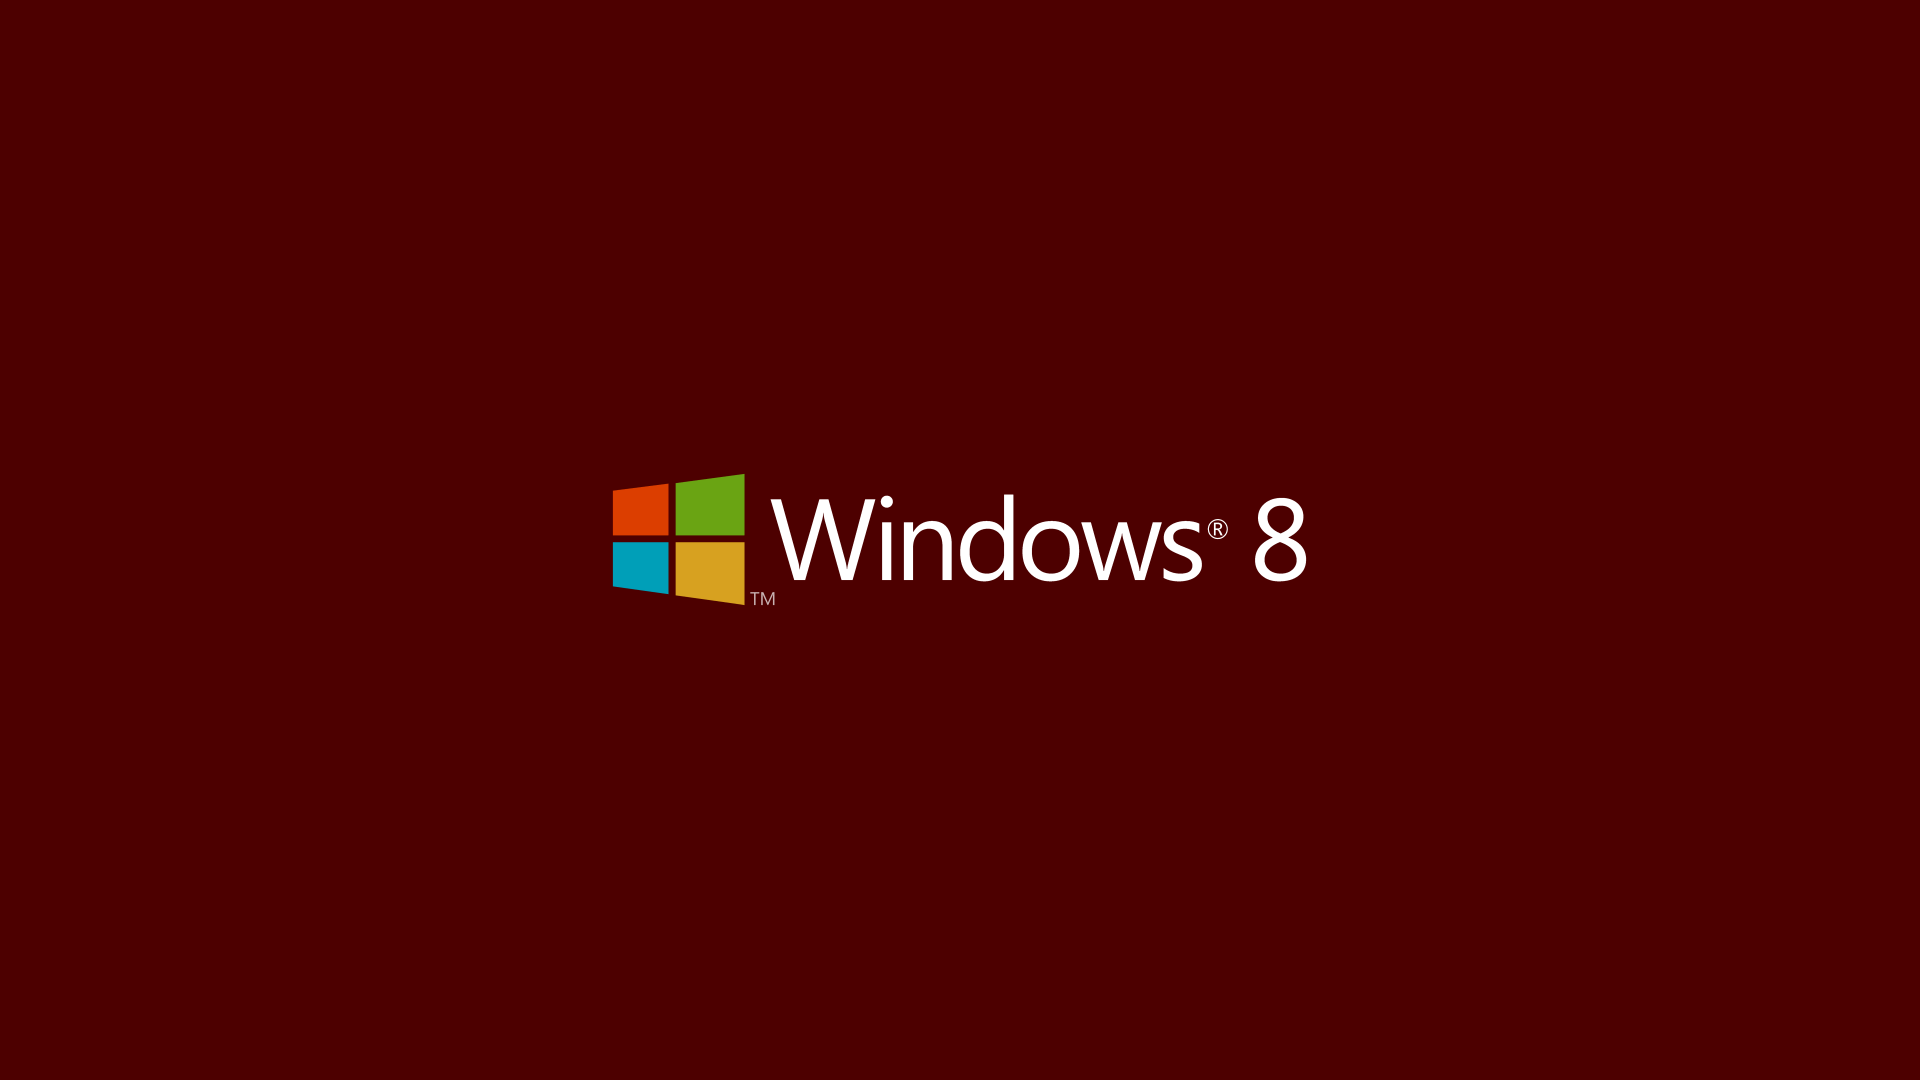 Windows Microsoft Wallpaper Image